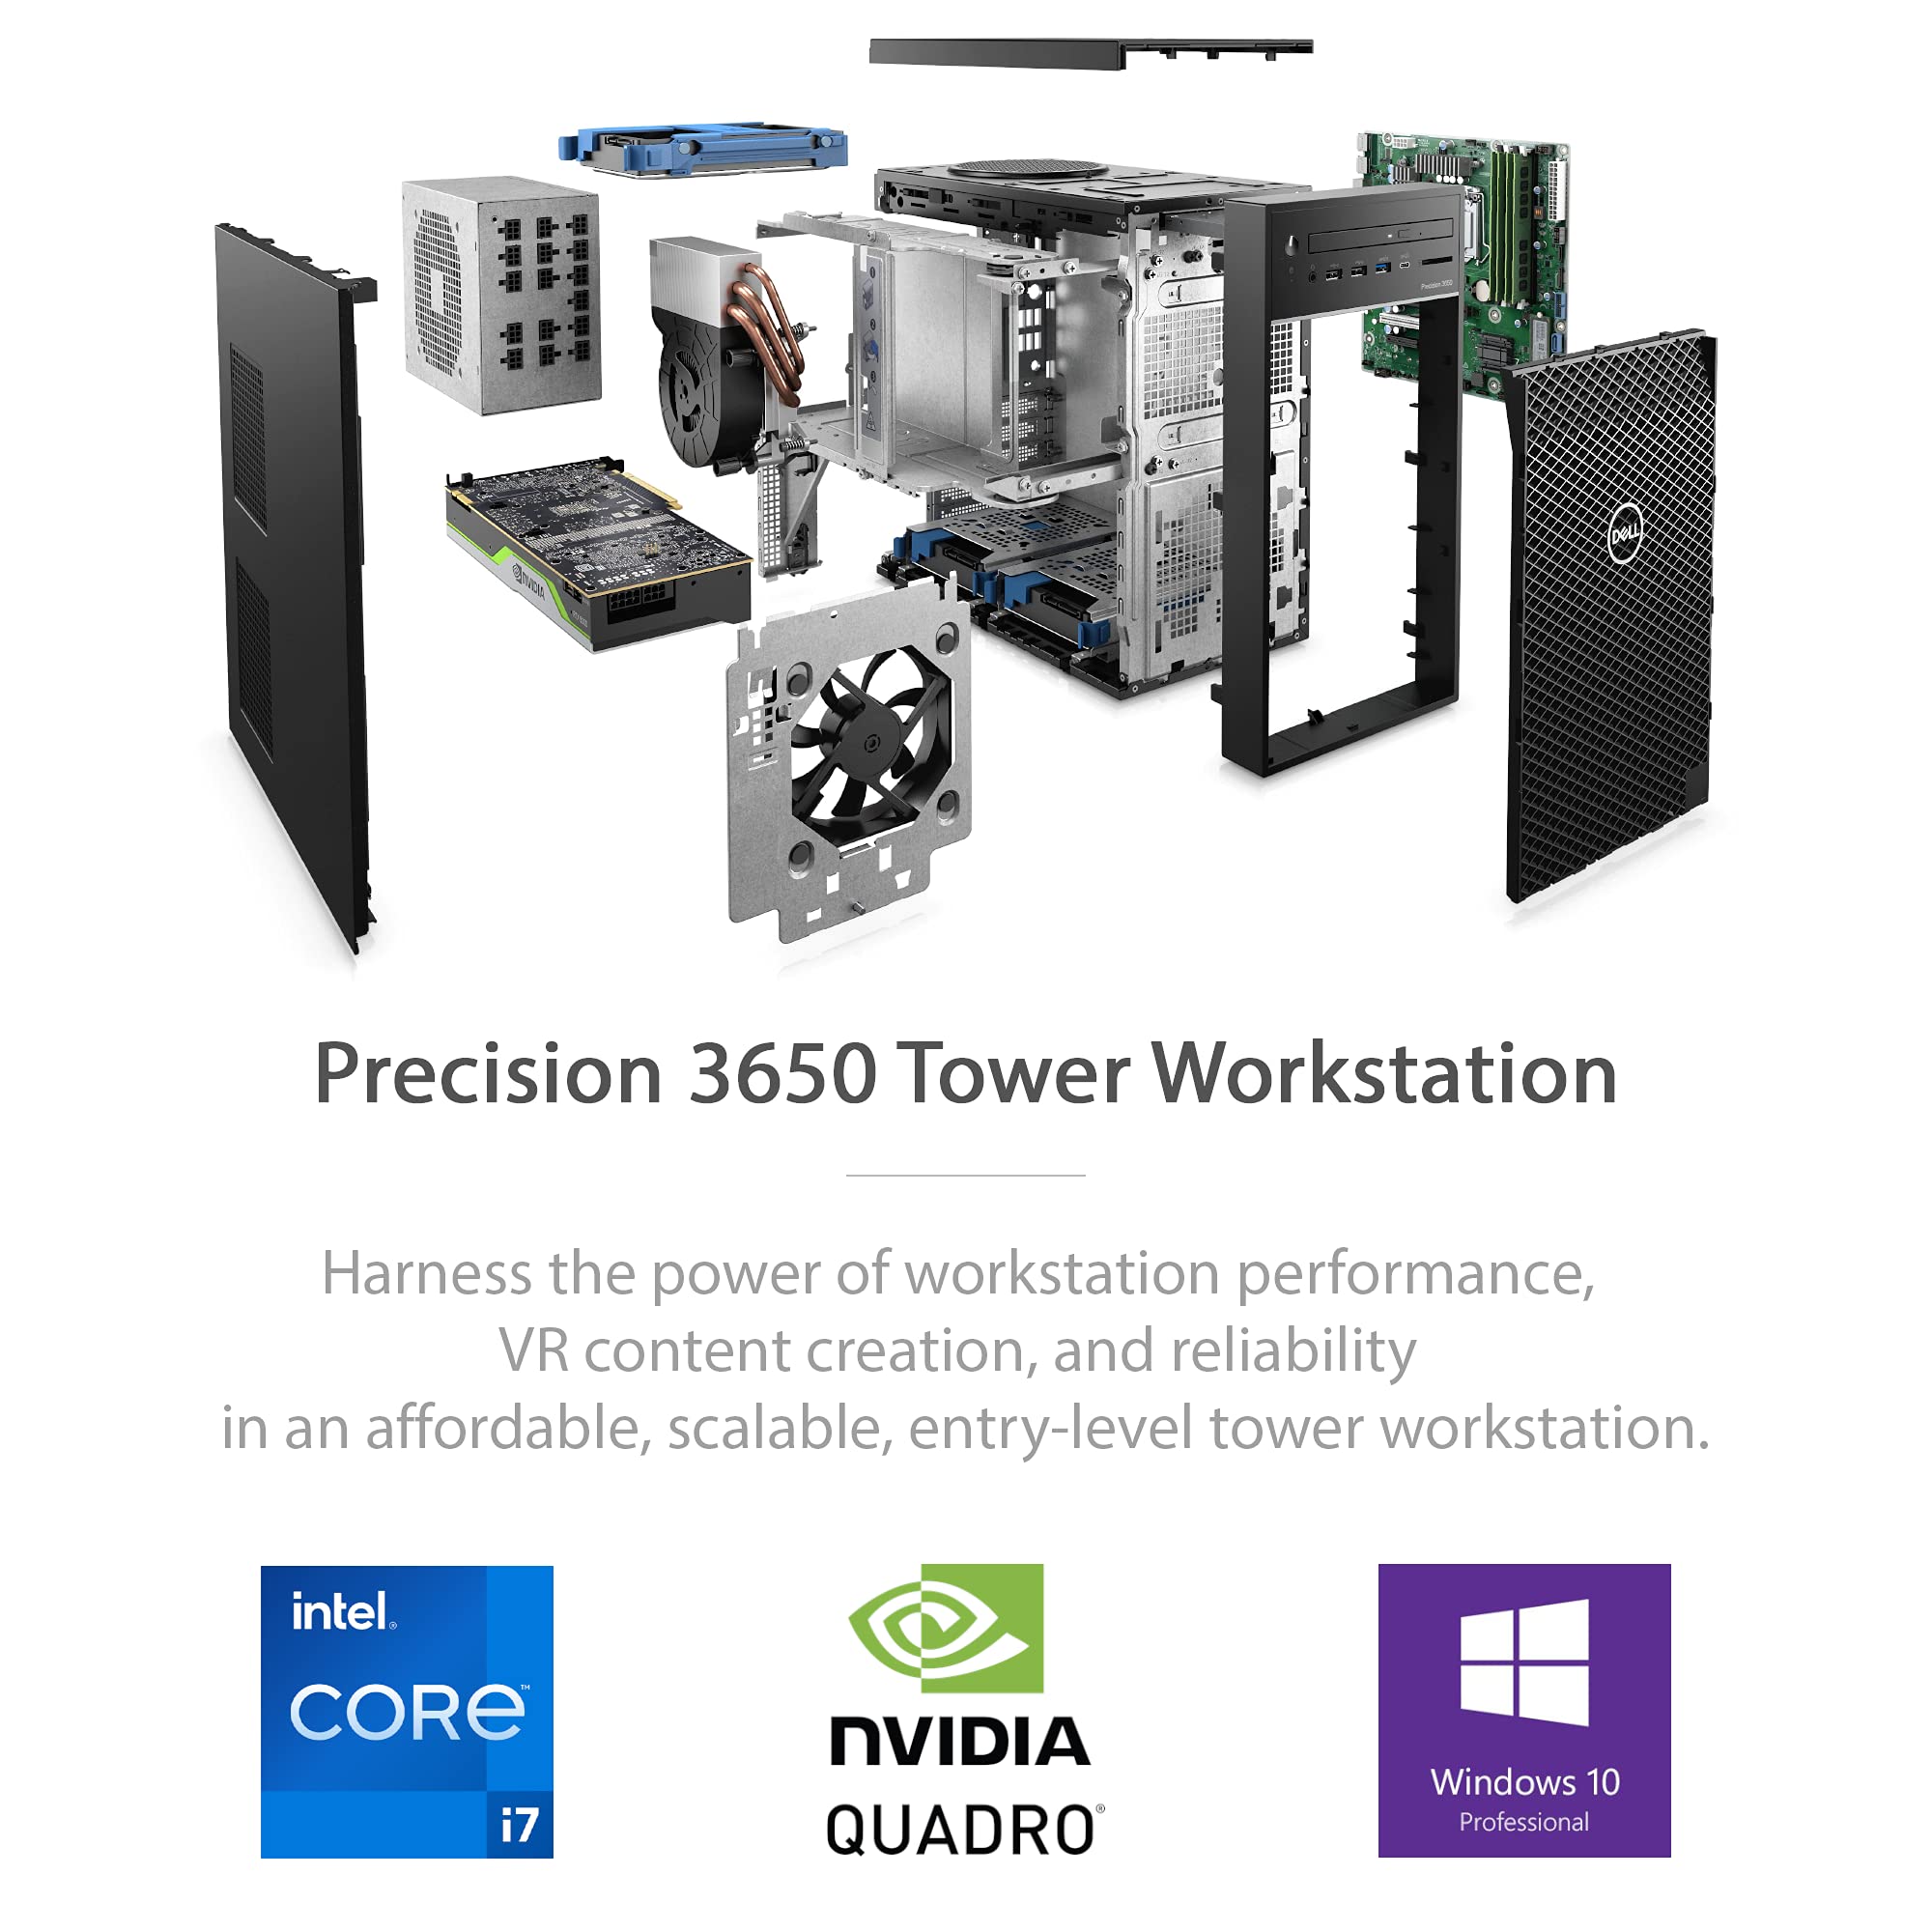 2021 Dell Precision 3650 Tower Workstation Desktop, Intel i7-11700, Quadro P1000 4G, 64GB RAM, 2TB SSD + 4TB HDD, No-DVD, WiFi 6, Type-C, DisplayPort, Keyboard & Mouse, Win 10 Pro